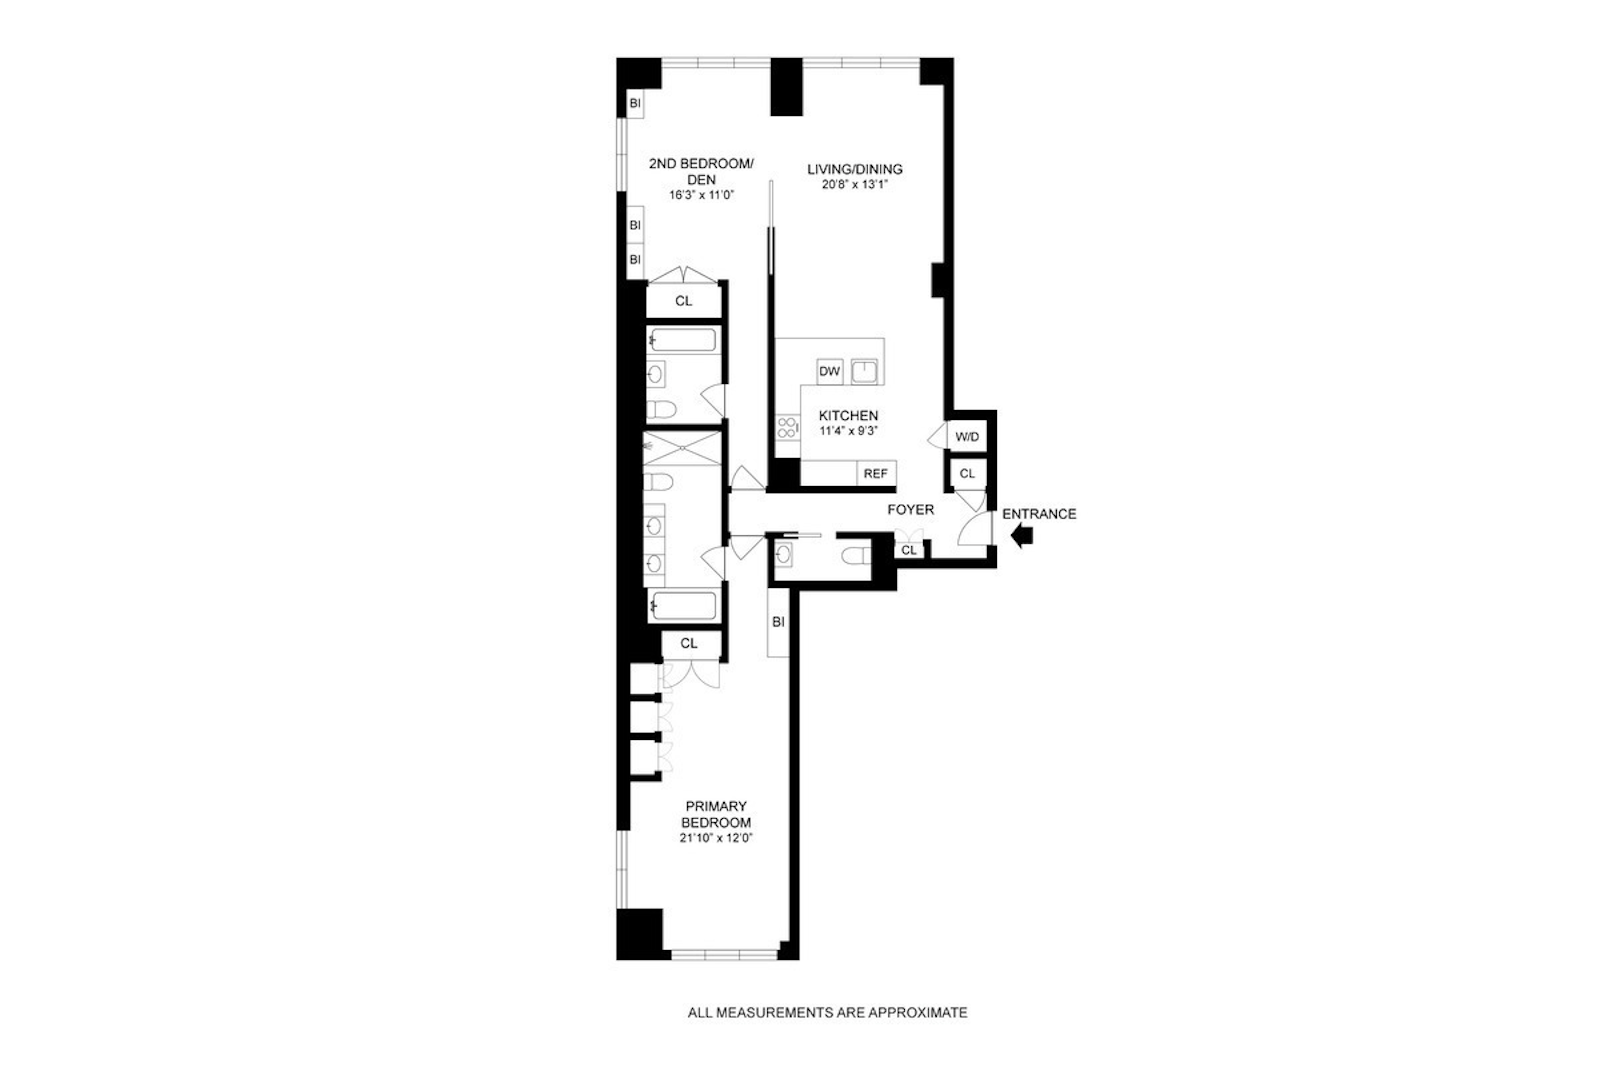 Floorplan for 261 West 25th Street, 8B